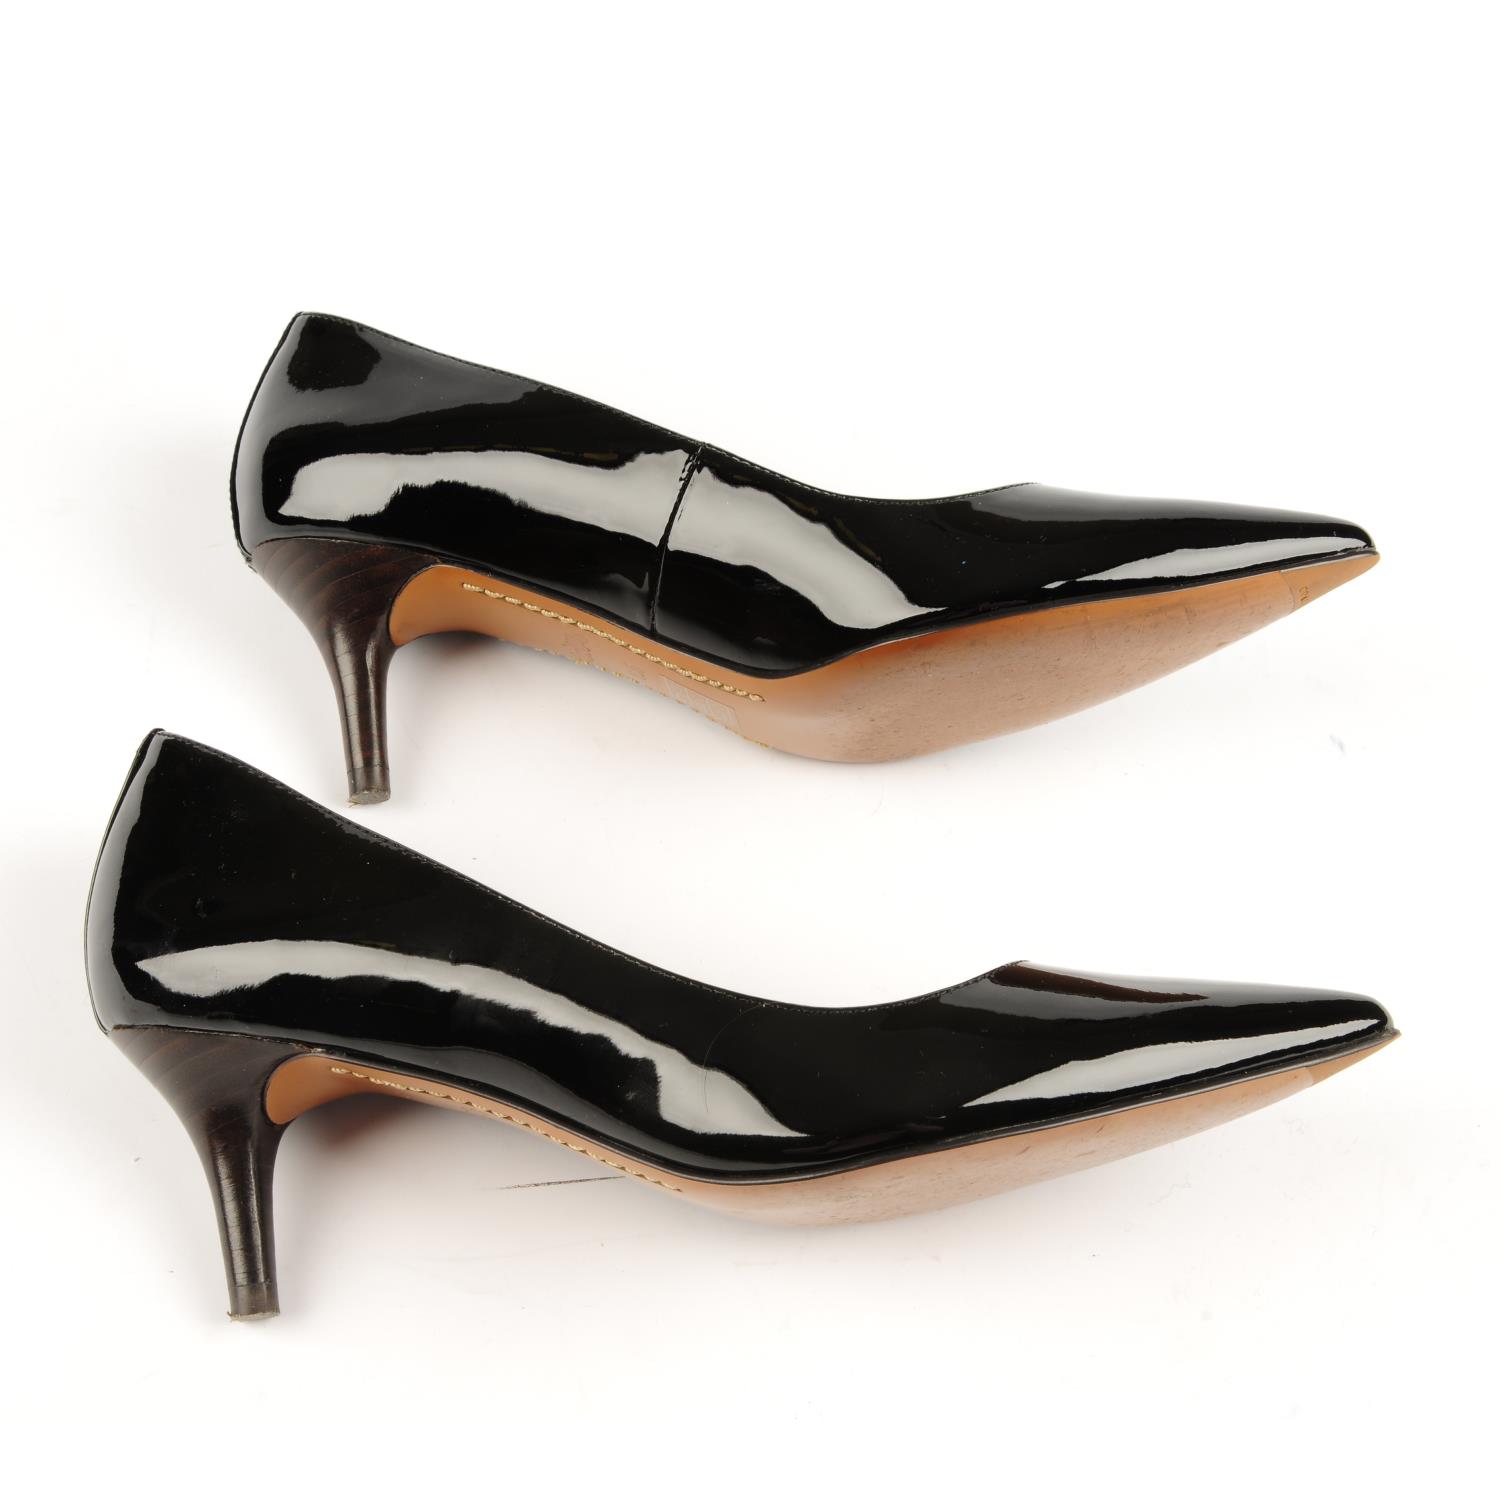 COACH - a pair of kitten heels. - Image 2 of 3